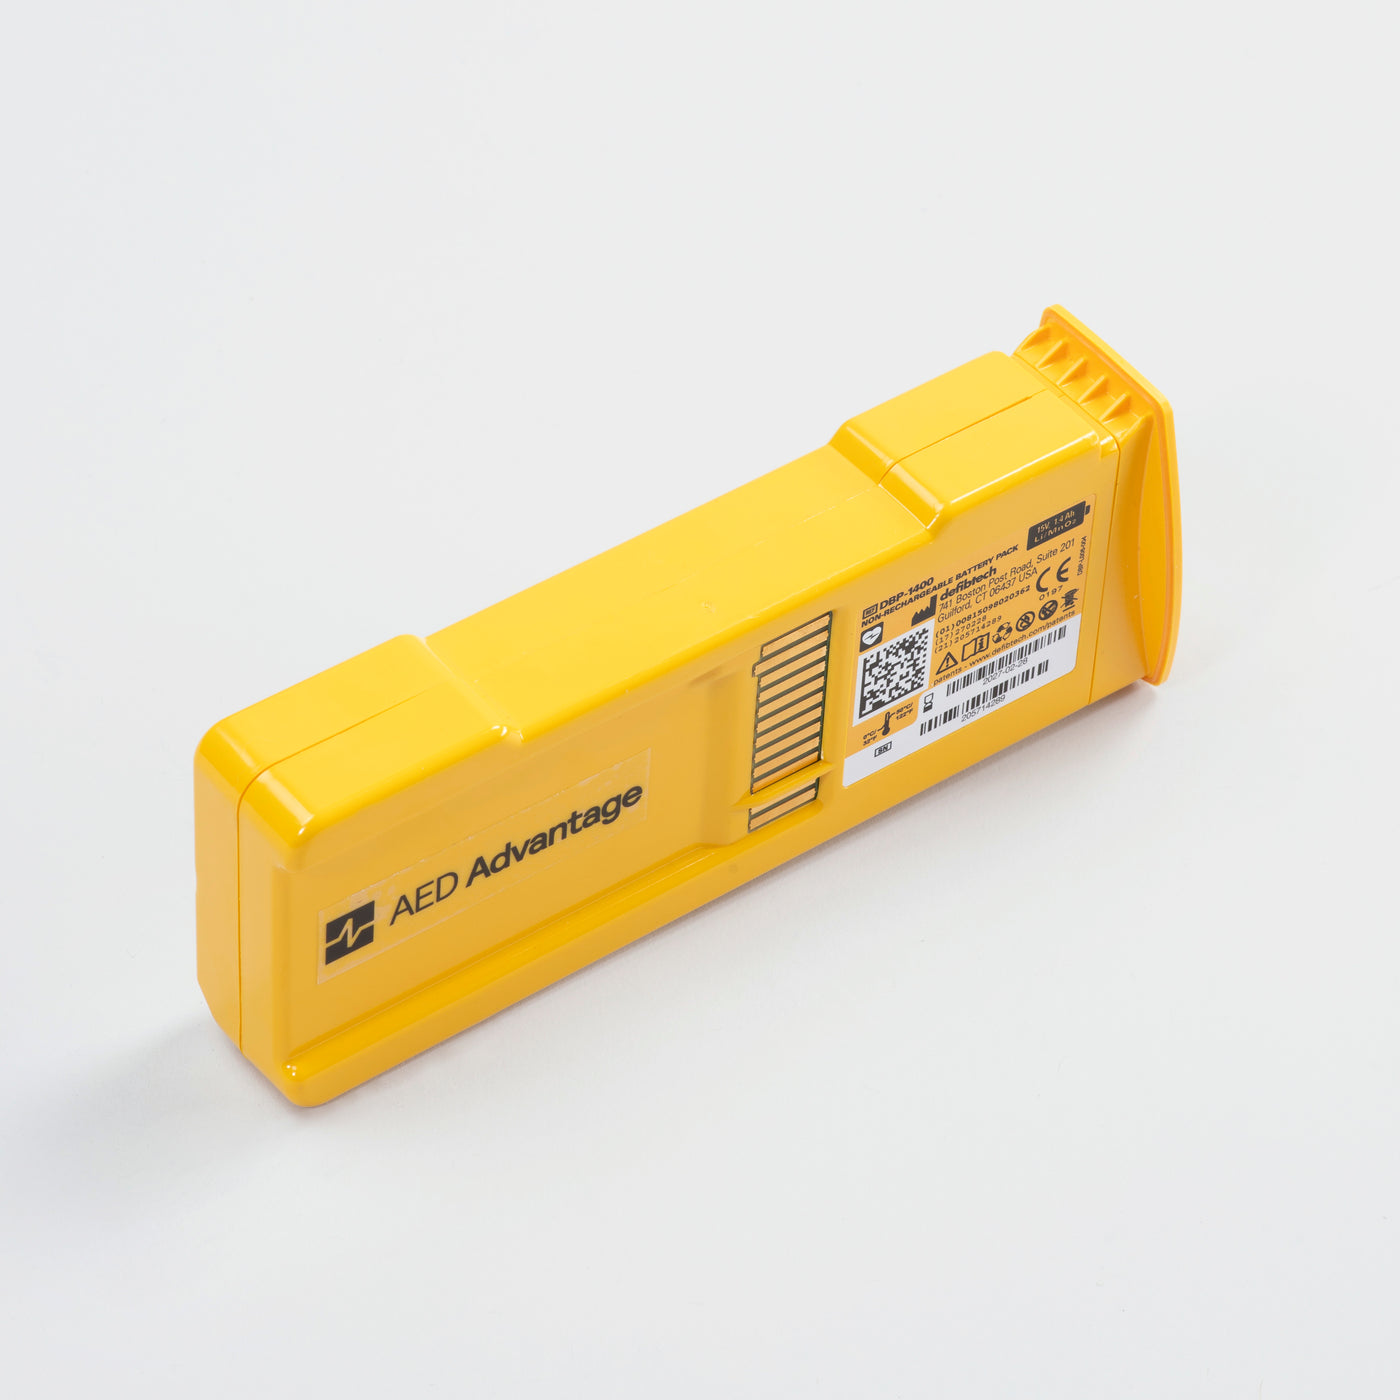 A rectangular yellow defibtech lifeline aed battery